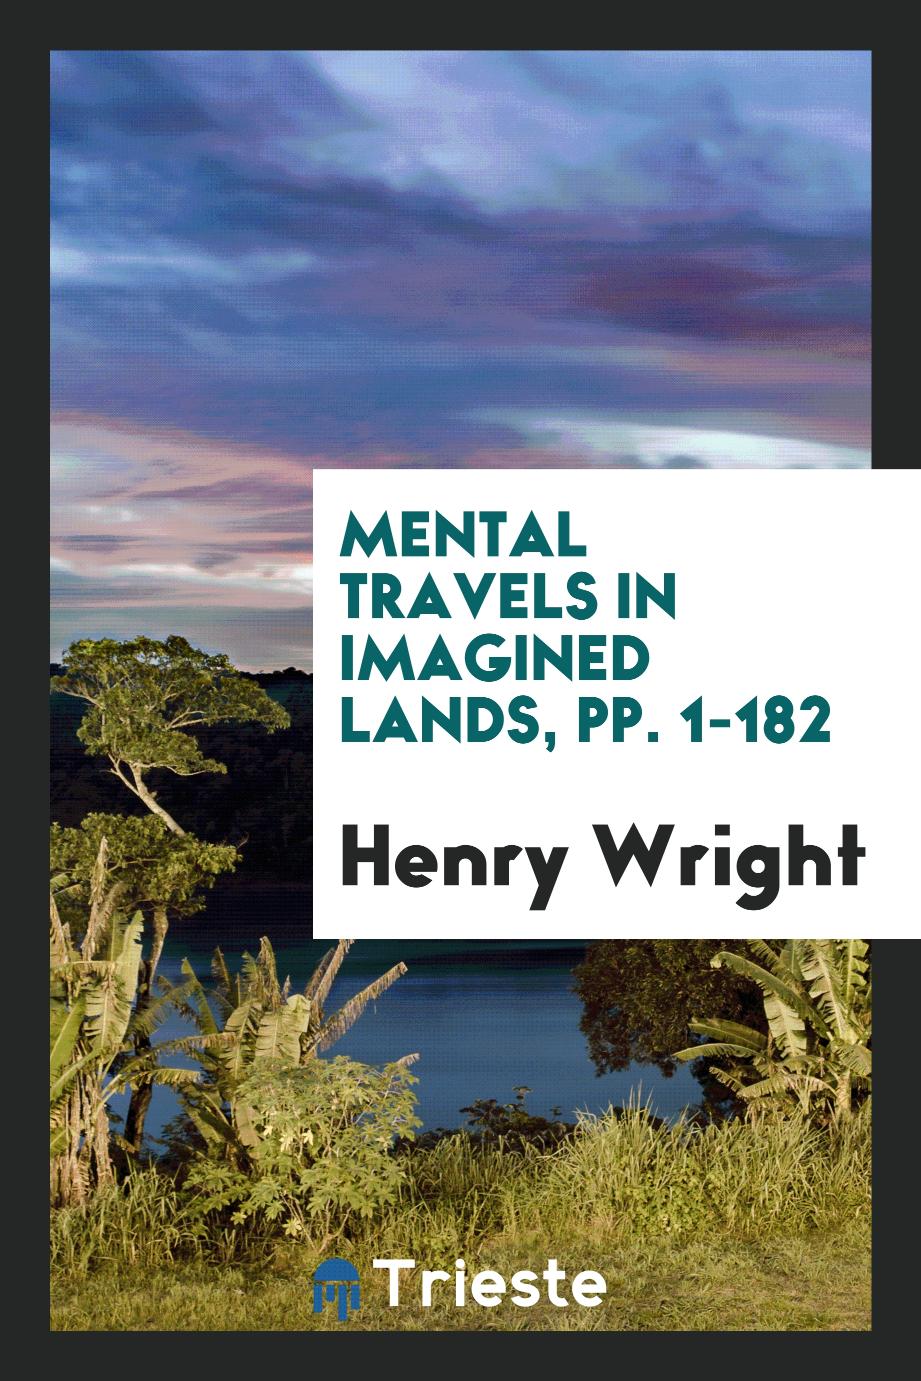 Mental Travels in Imagined Lands, pp. 1-182